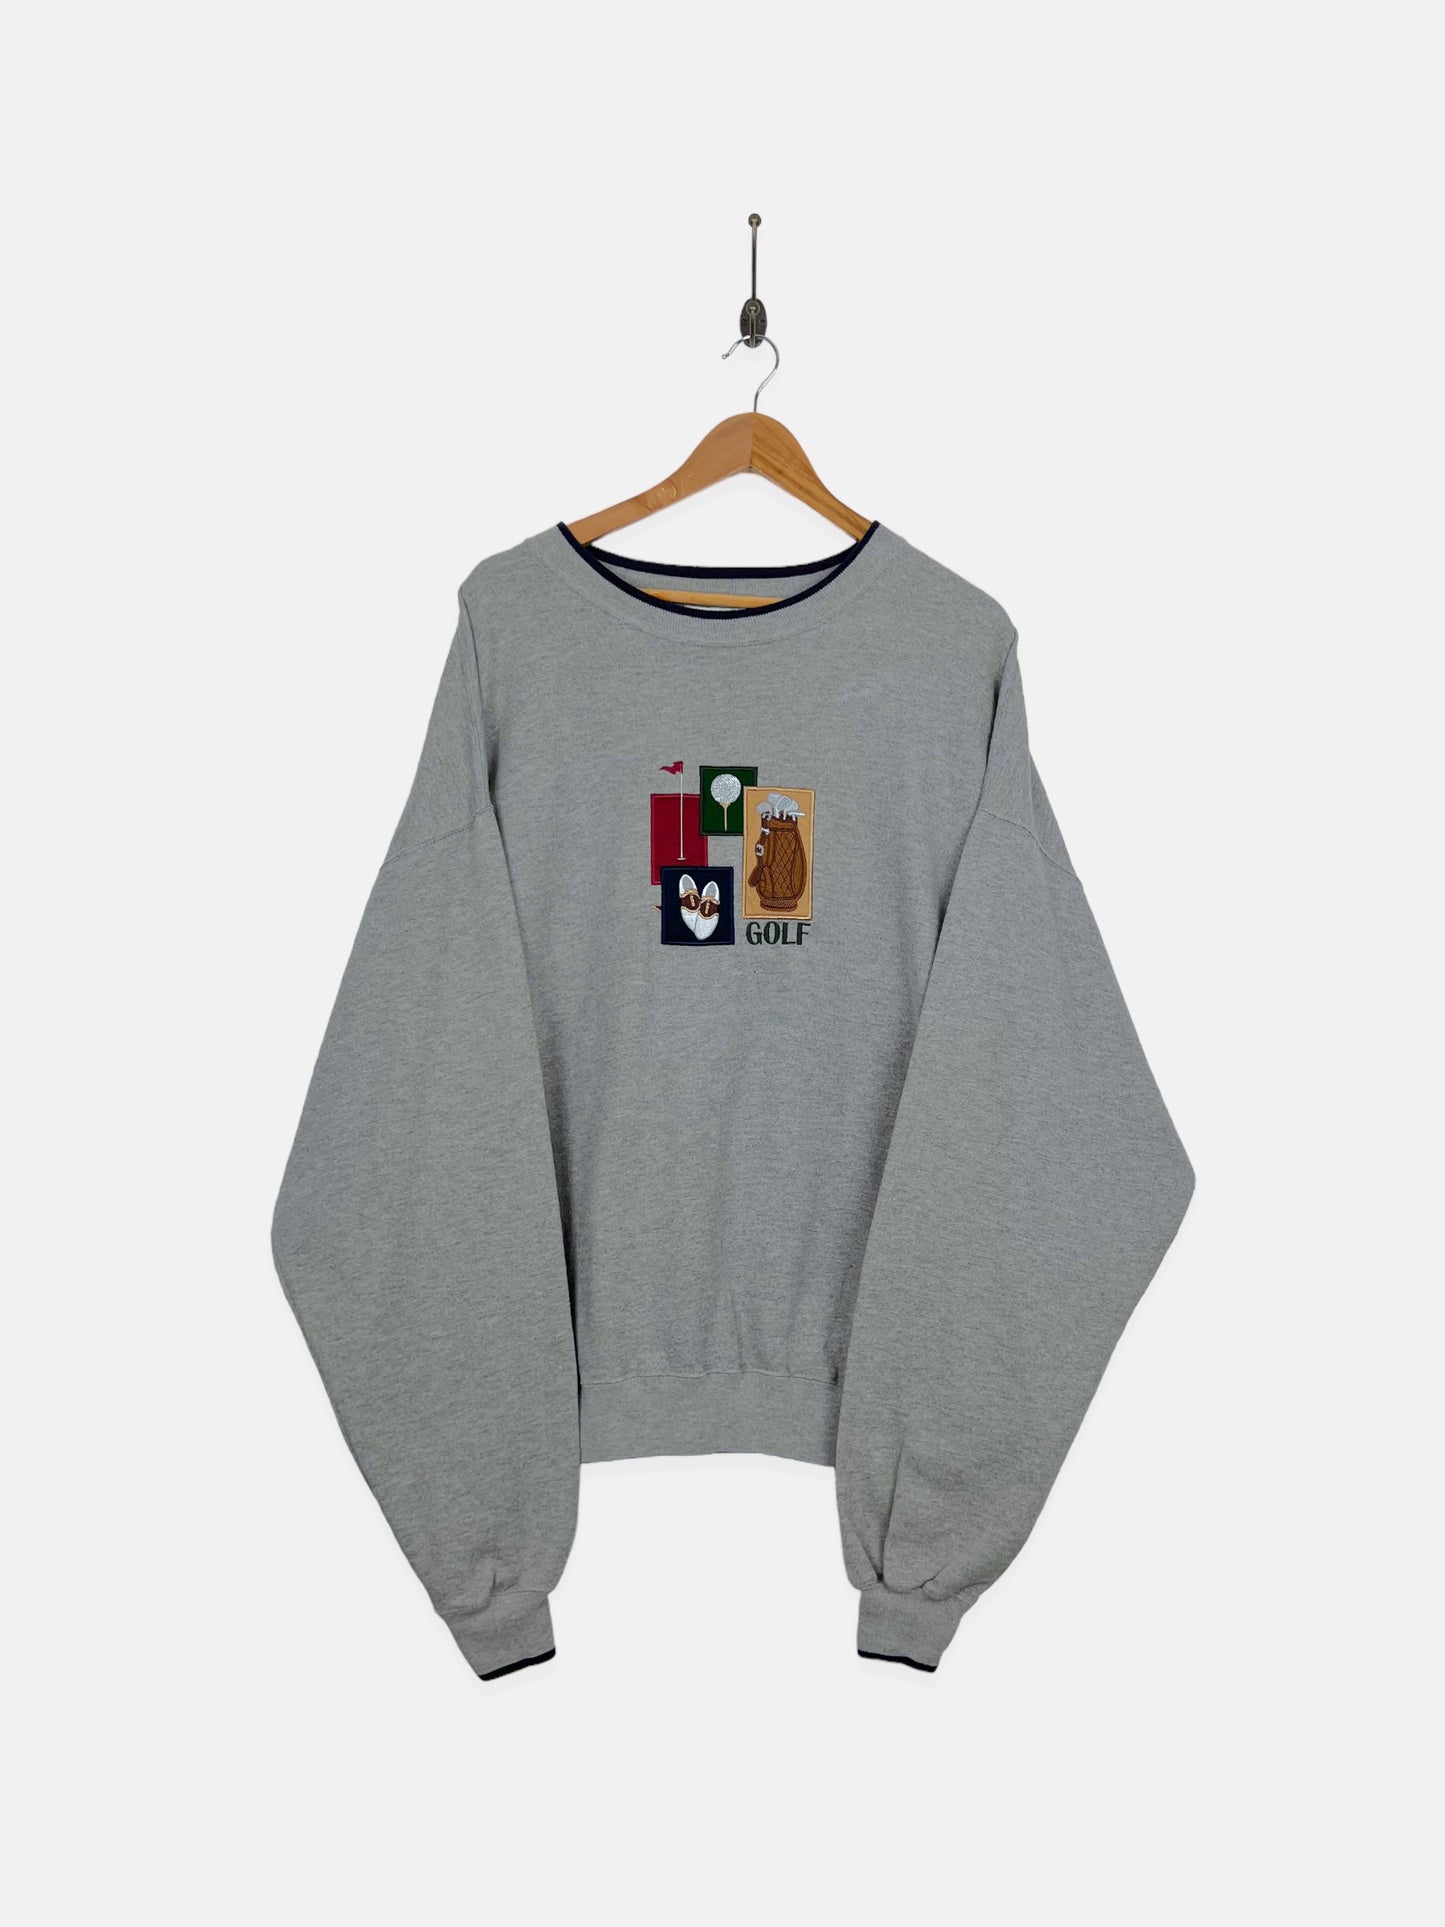 90's Golf Embroidered USA Made Vintage Sweatshirt Size 2-3XL